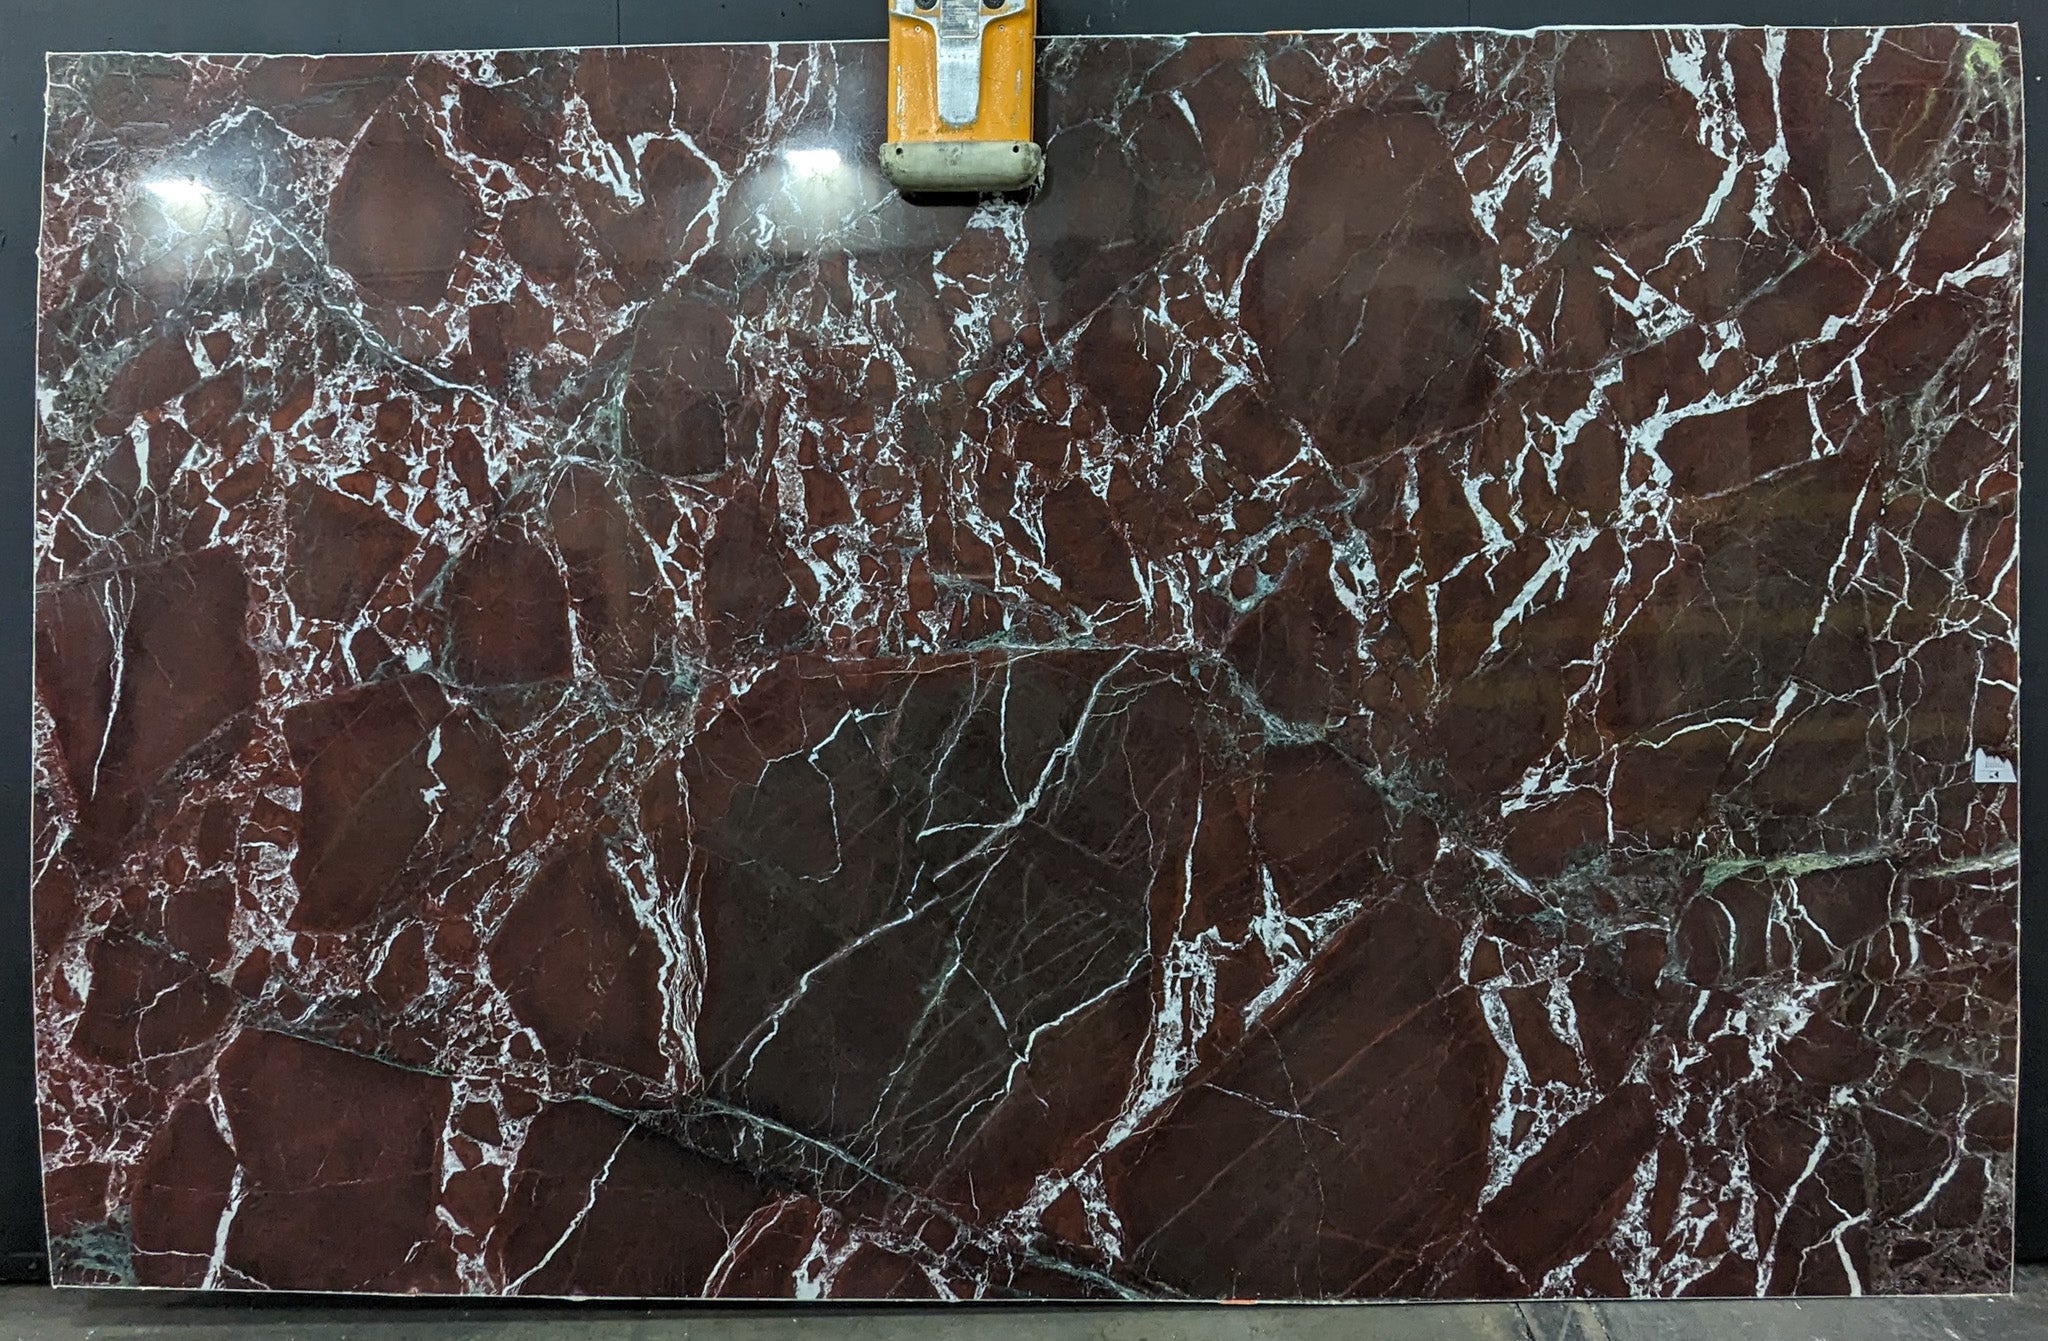  Breccia Vino Marble Slab 3/4  Polished Stone - KM23489#19 -  69x107 